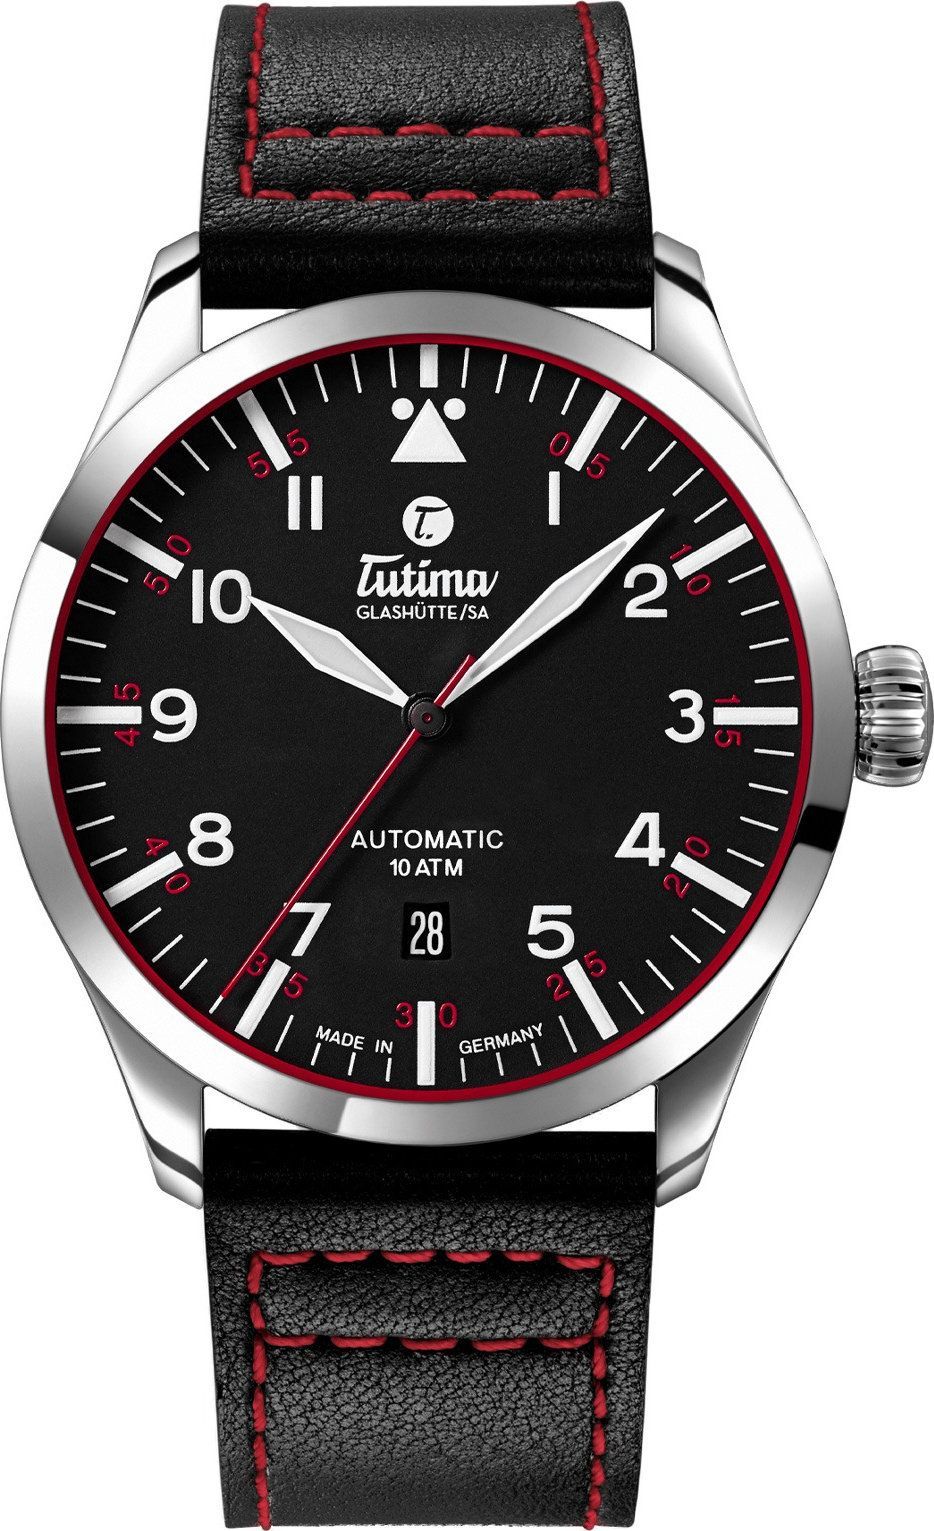 Tutima Glashütte Flieger Automatic 41 mm Watch in Black Dial For Men - 1